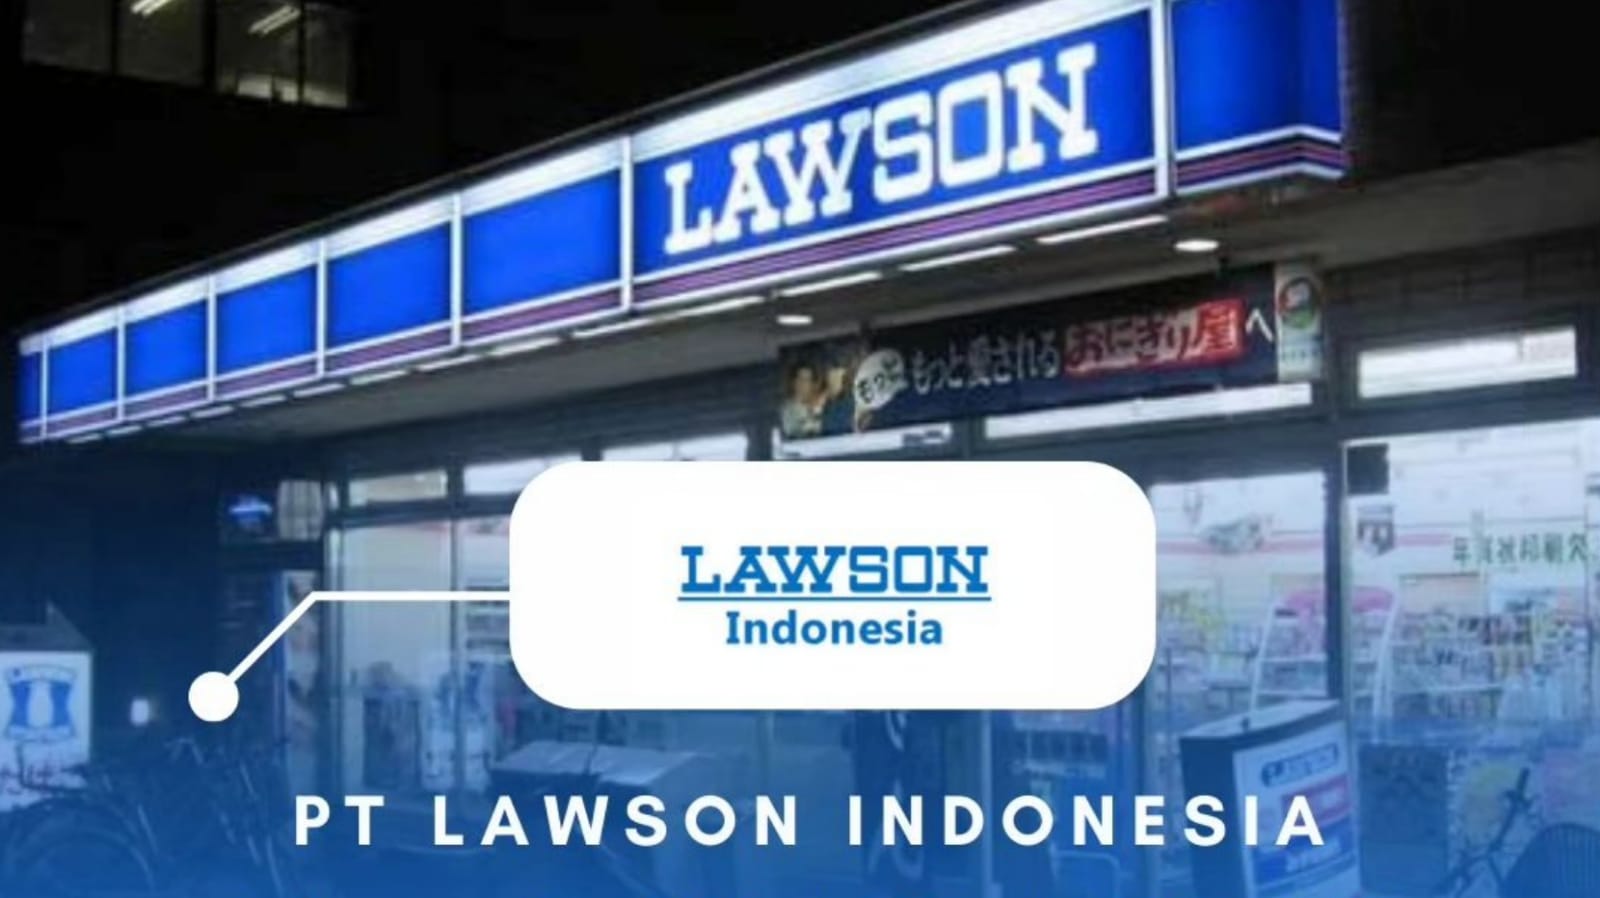 Lawson Indonesia Membuka Lowongan Kerja untuk Lulusan S1 Semua Jurusan Cek Syaratnya Disini